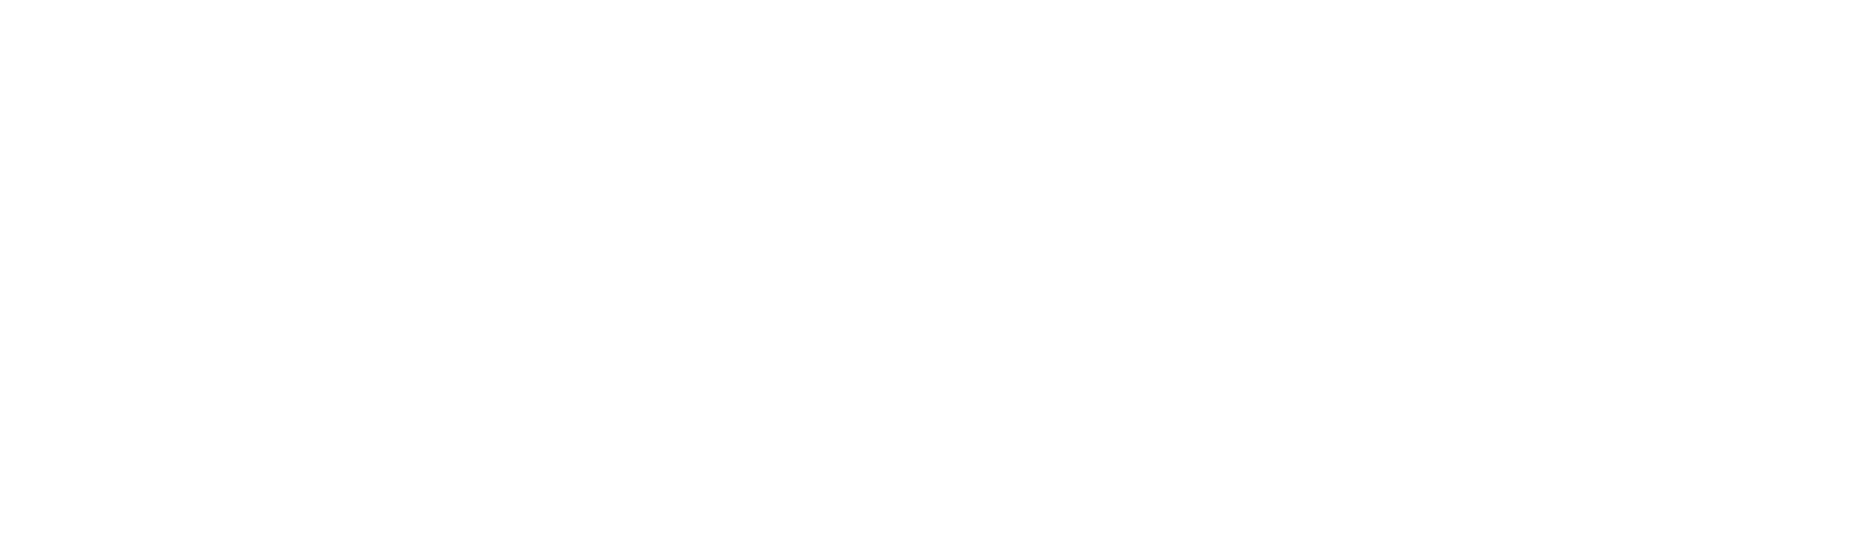 Congressman Earl Blumenauer logo